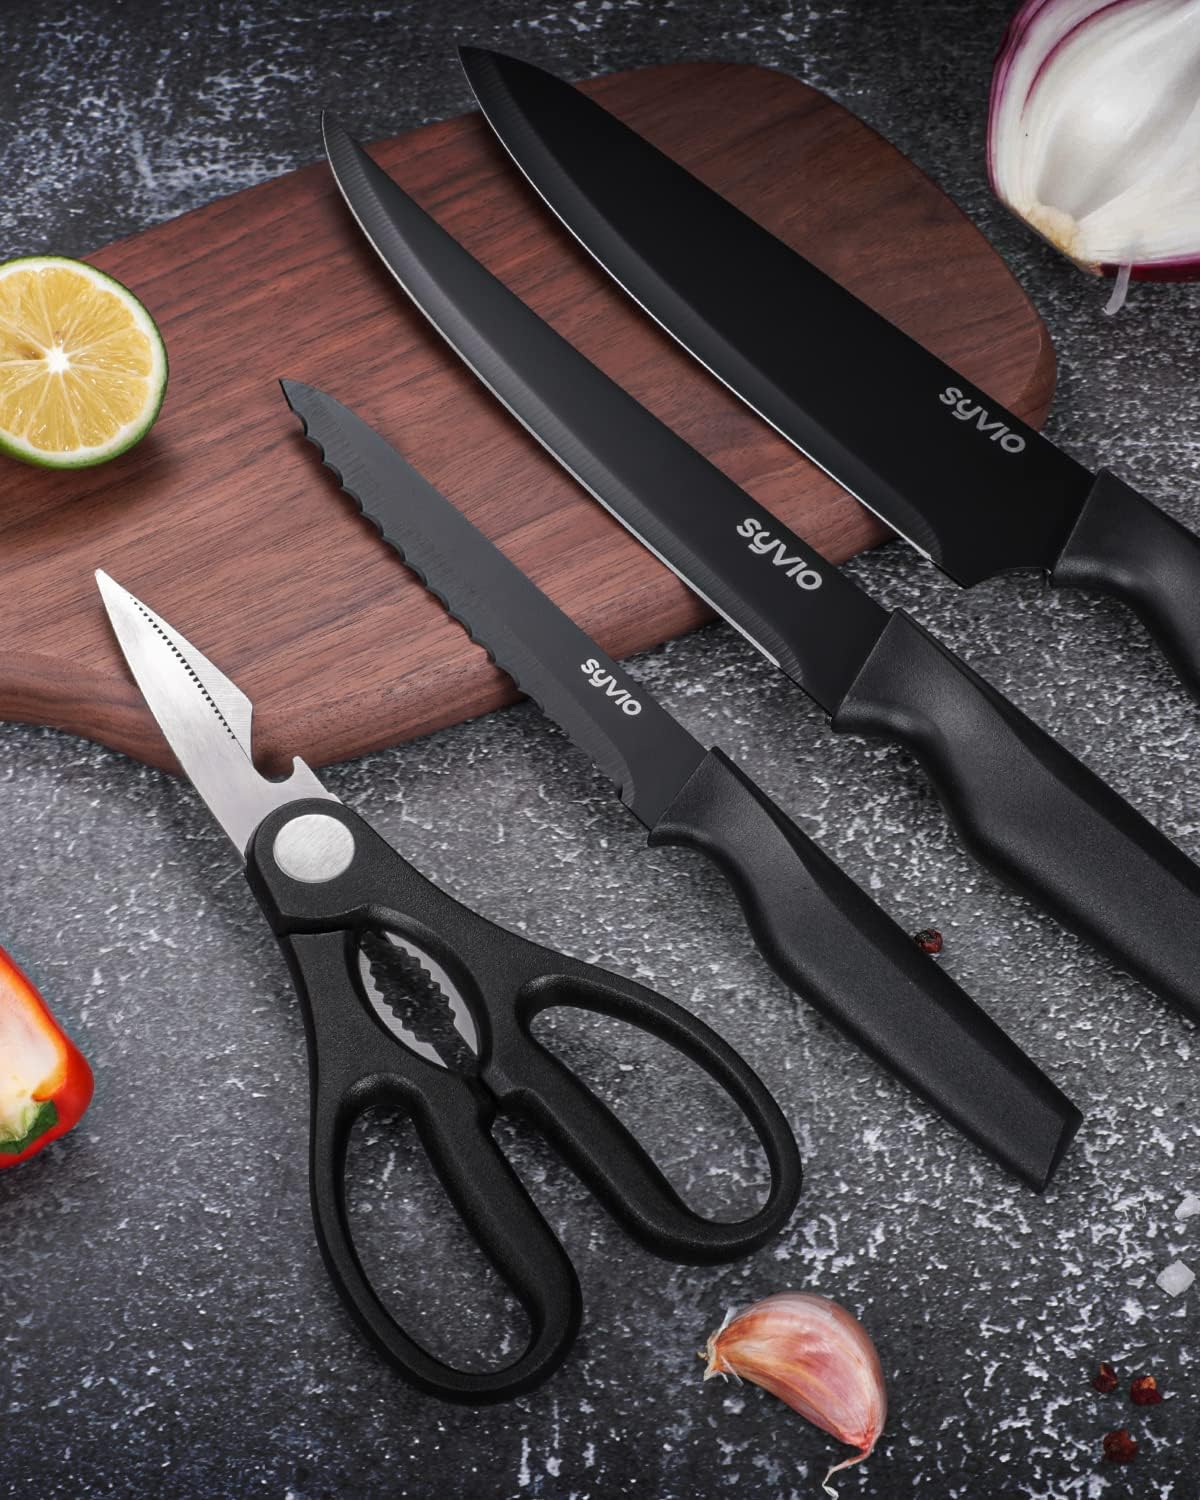  AOKEDA 15pcs Kitchen Knife Set with Block, Sharpener